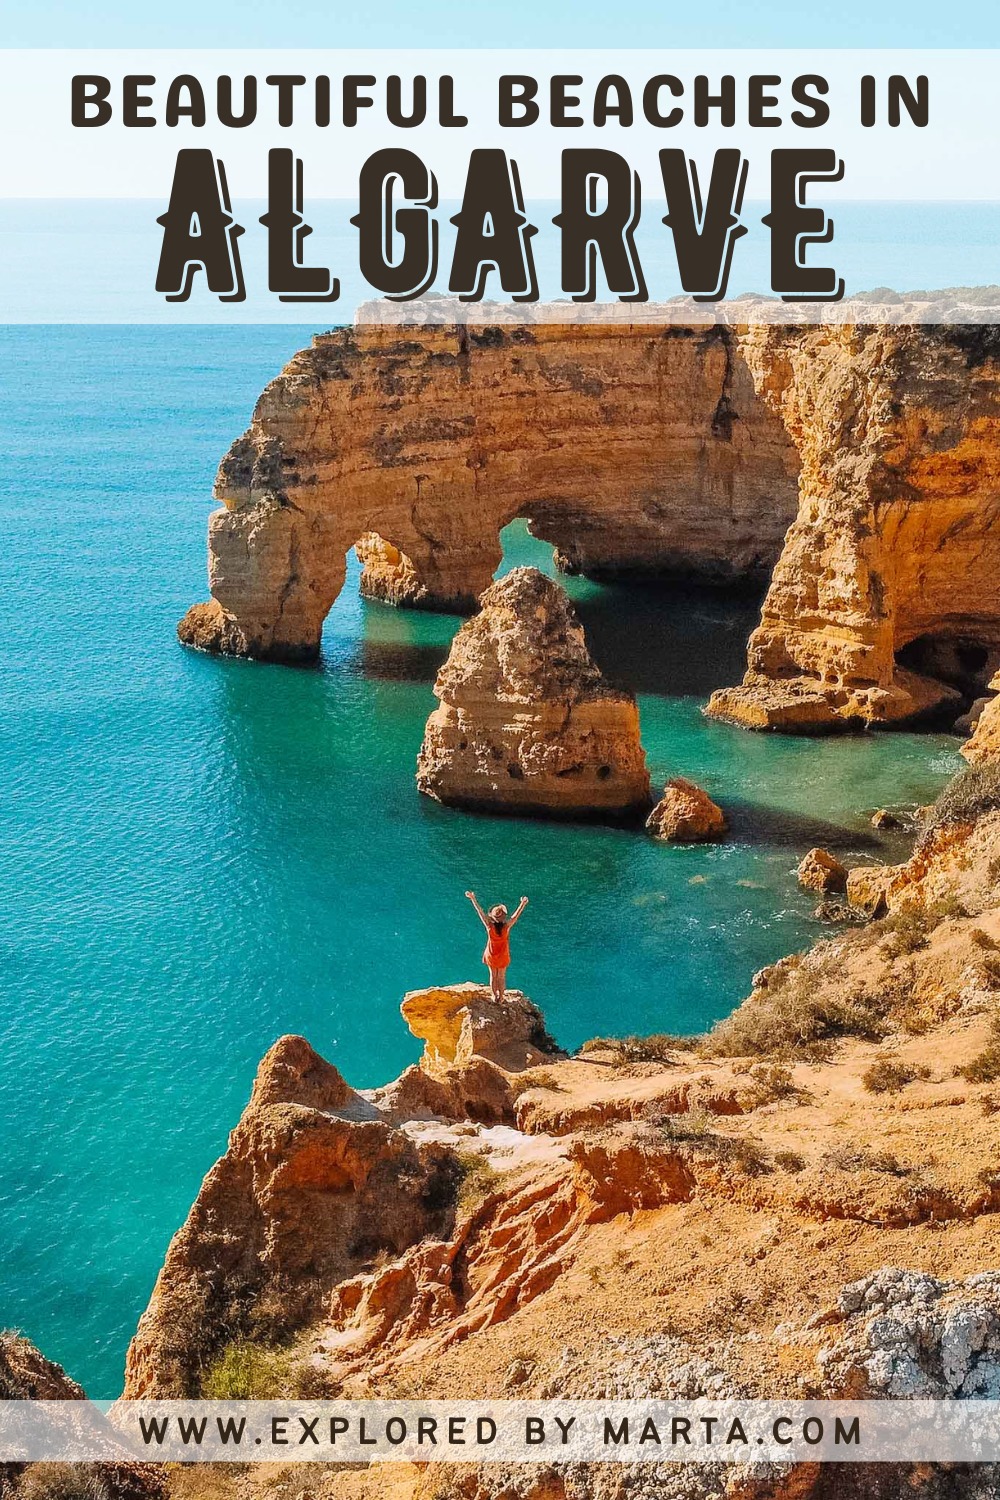 Most berautiful beaches in Algarve with cliffs